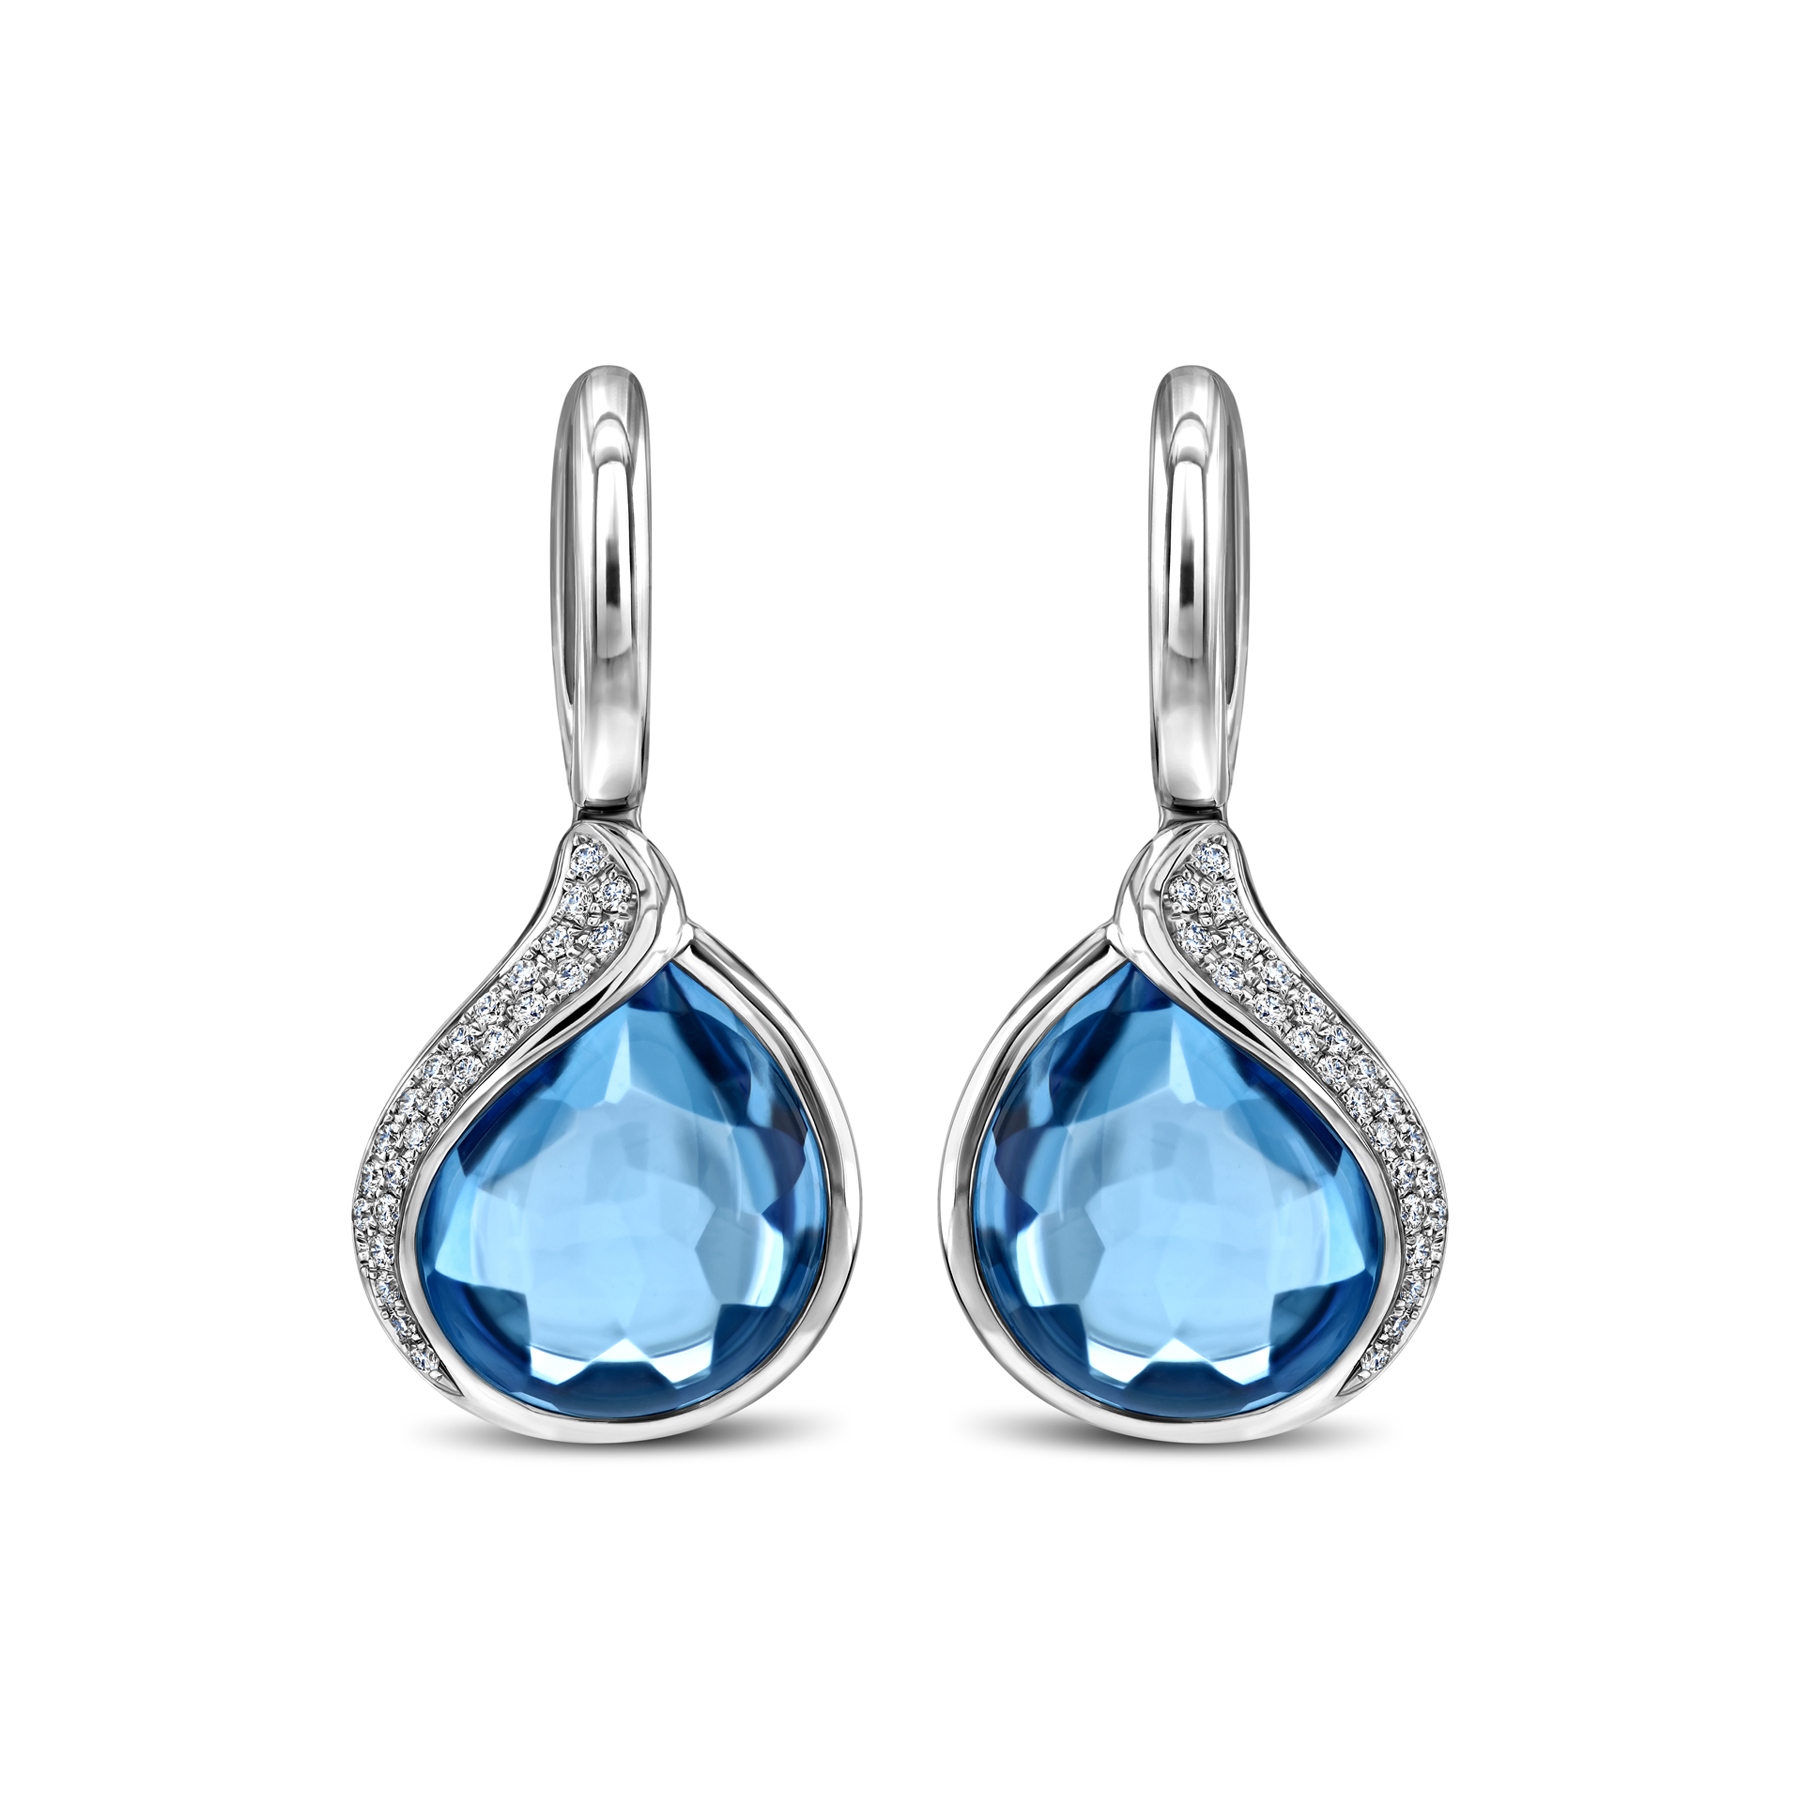 Cabochon blue topaz and diamond tear-drop earrings